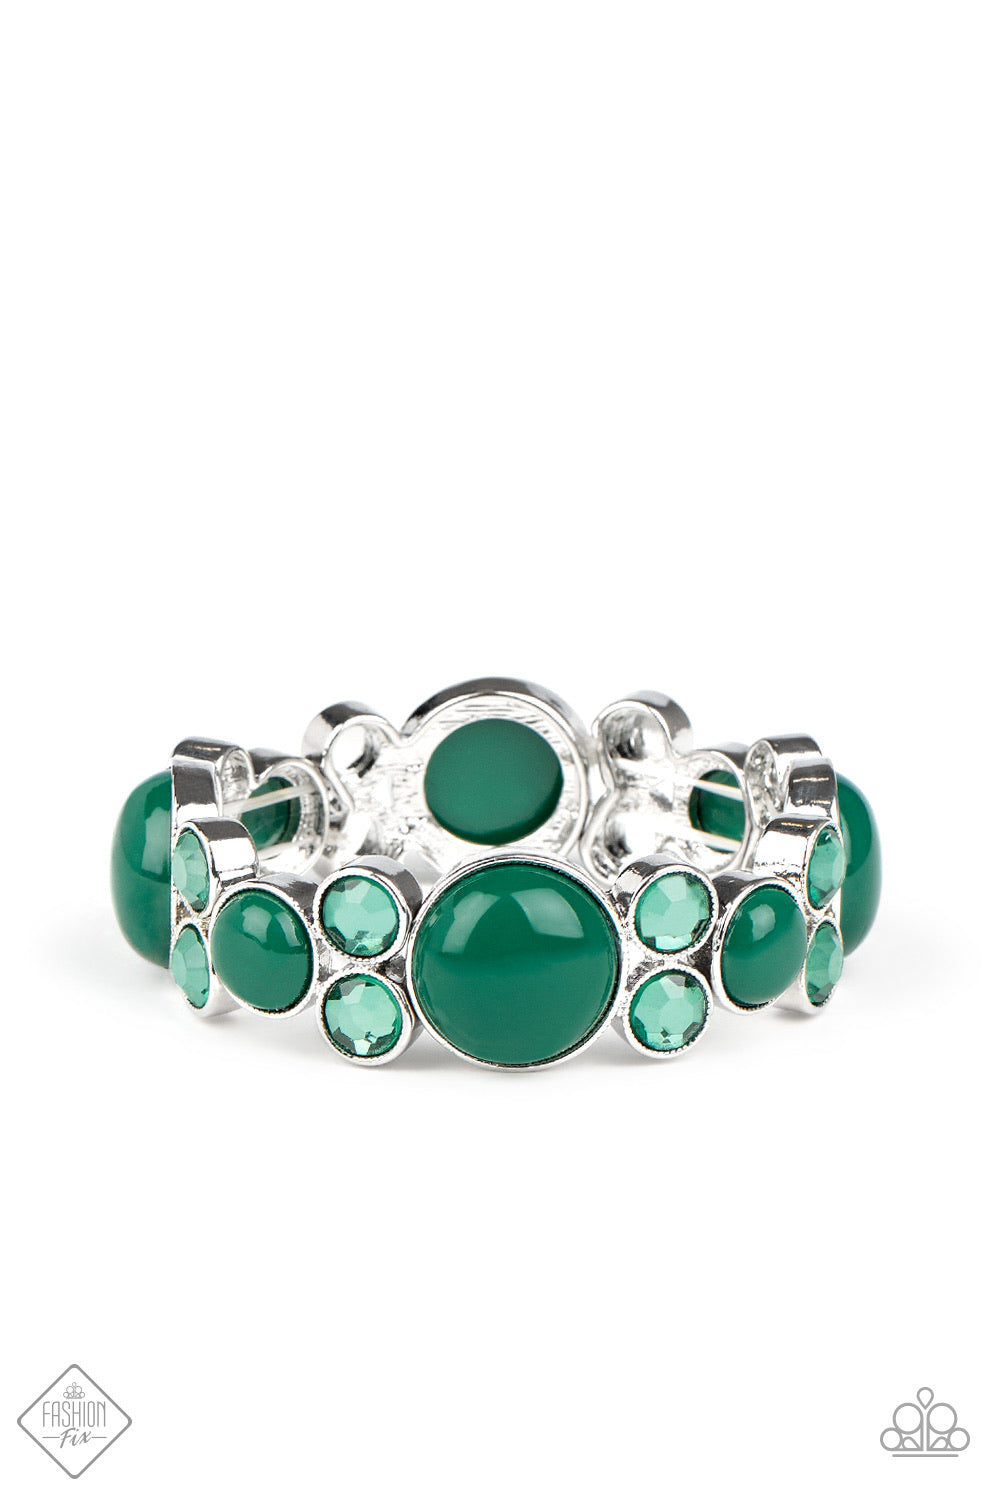 Celestrial Escape - Green Bracelet